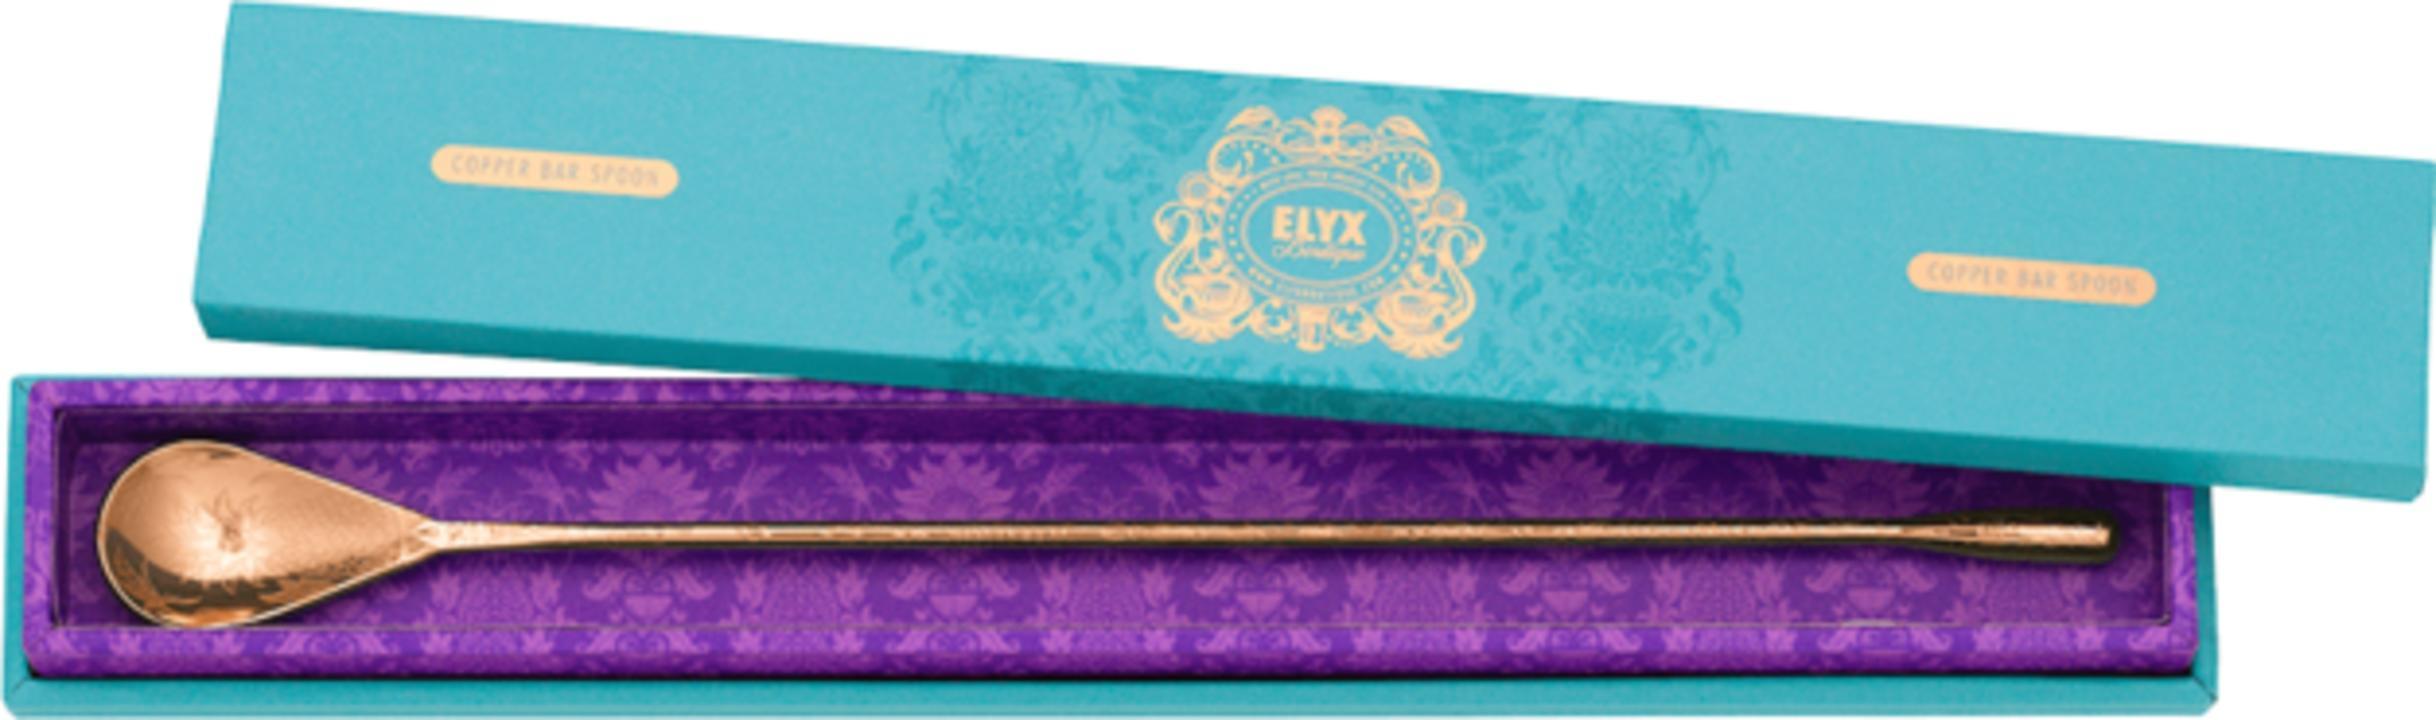 Absolut Elyx Copper Bar Spoon Gift Box